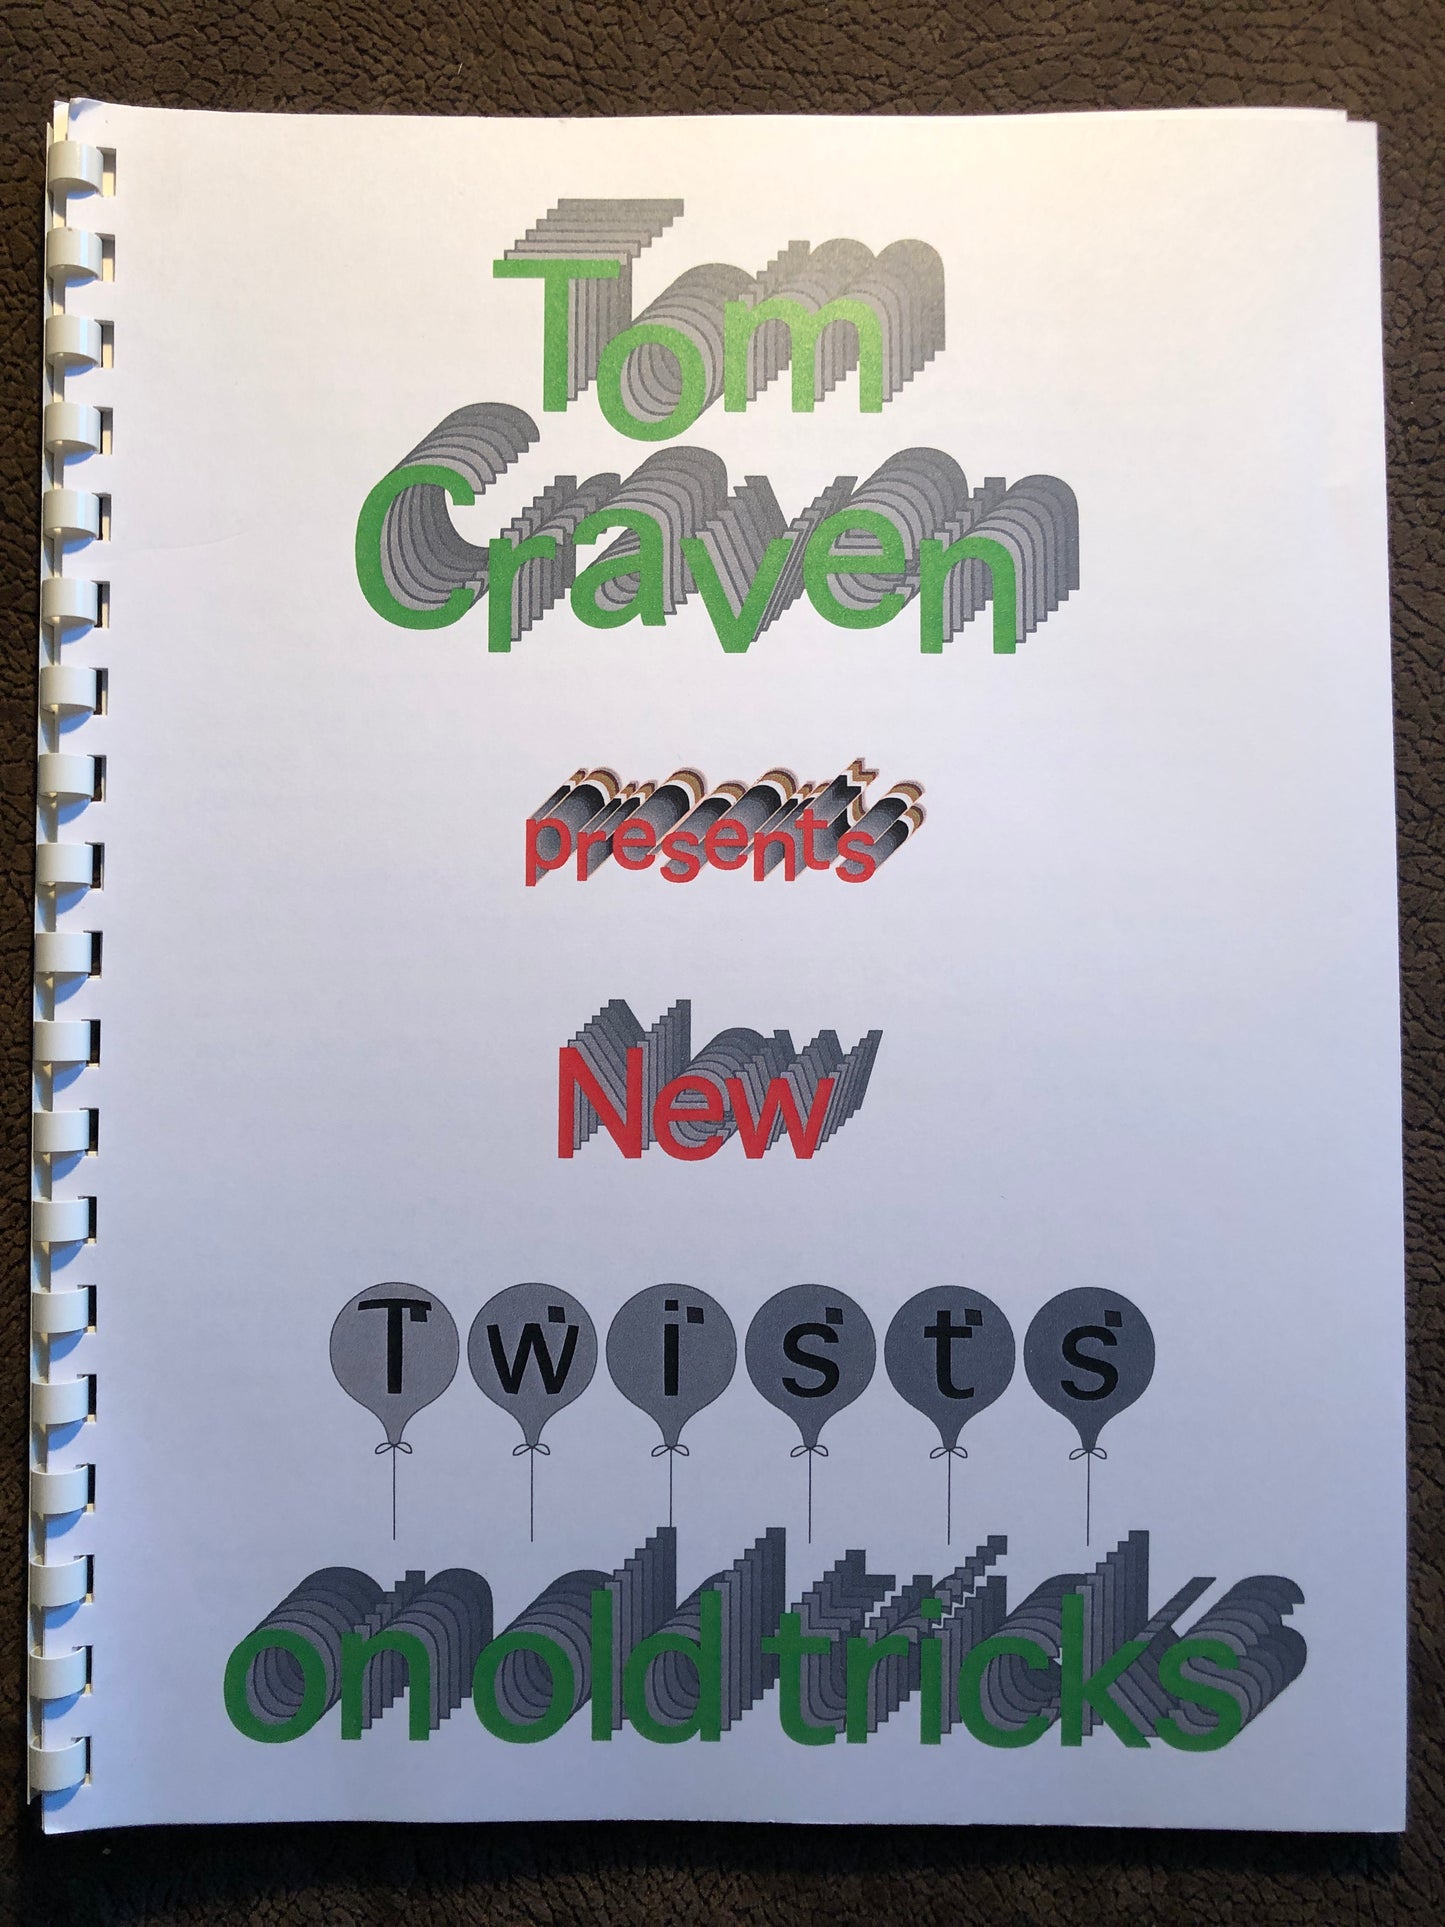 New Twists On Old Tricks - Tom Craven